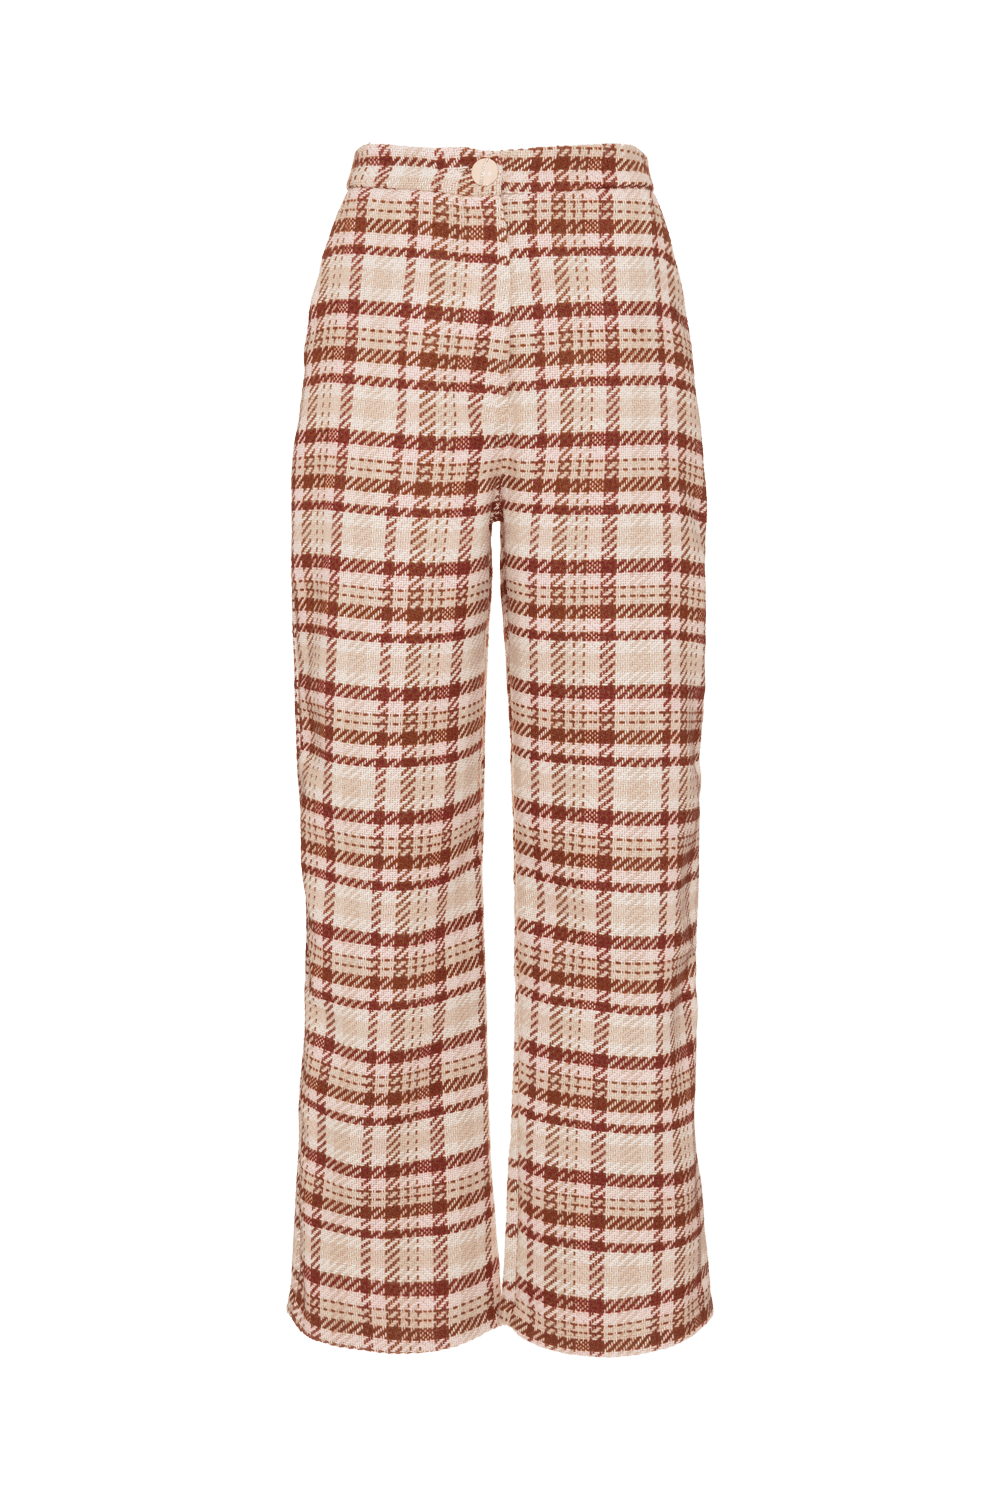 Calça modern tweed marrom